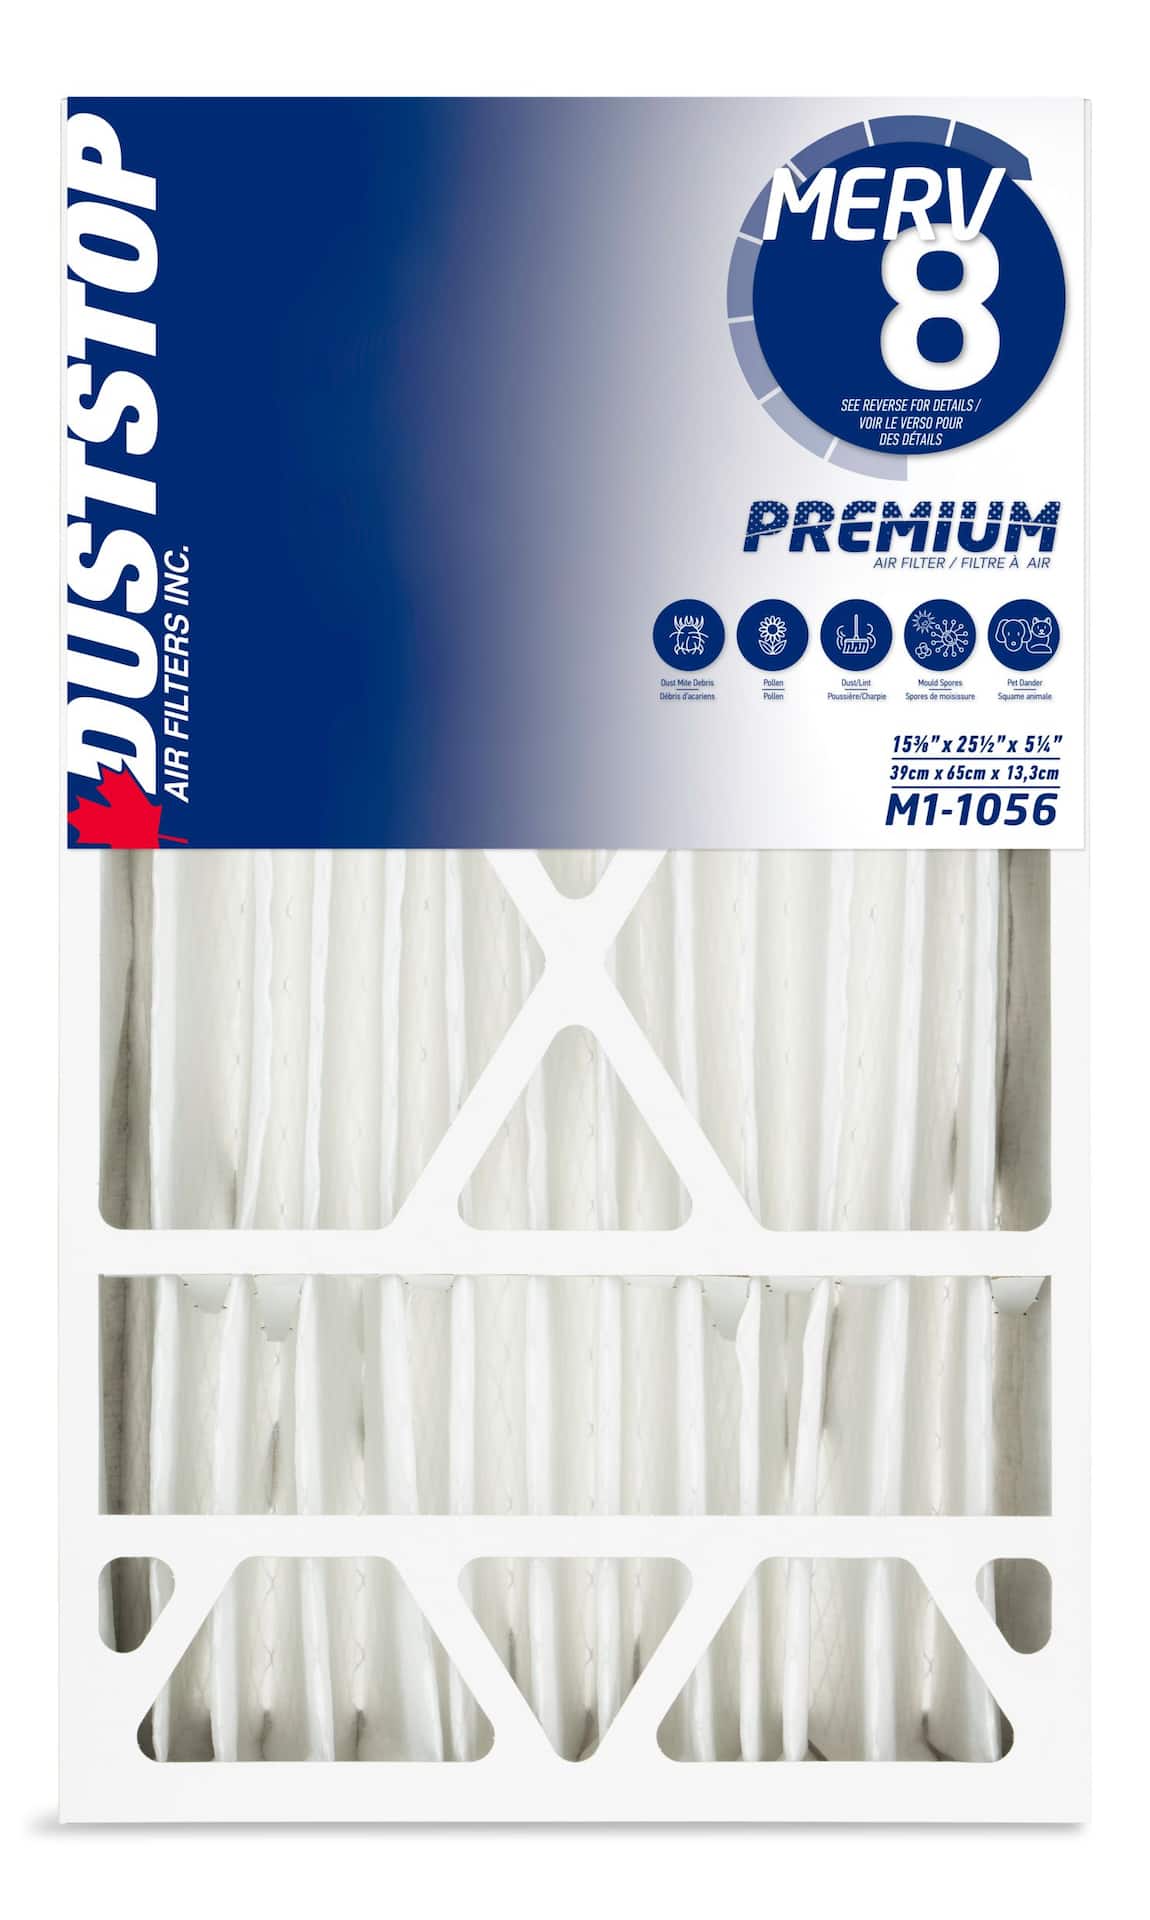 Duststop MERV 8 Premium Filter, 16-in x 26-in x 5-in | Canadian Tire